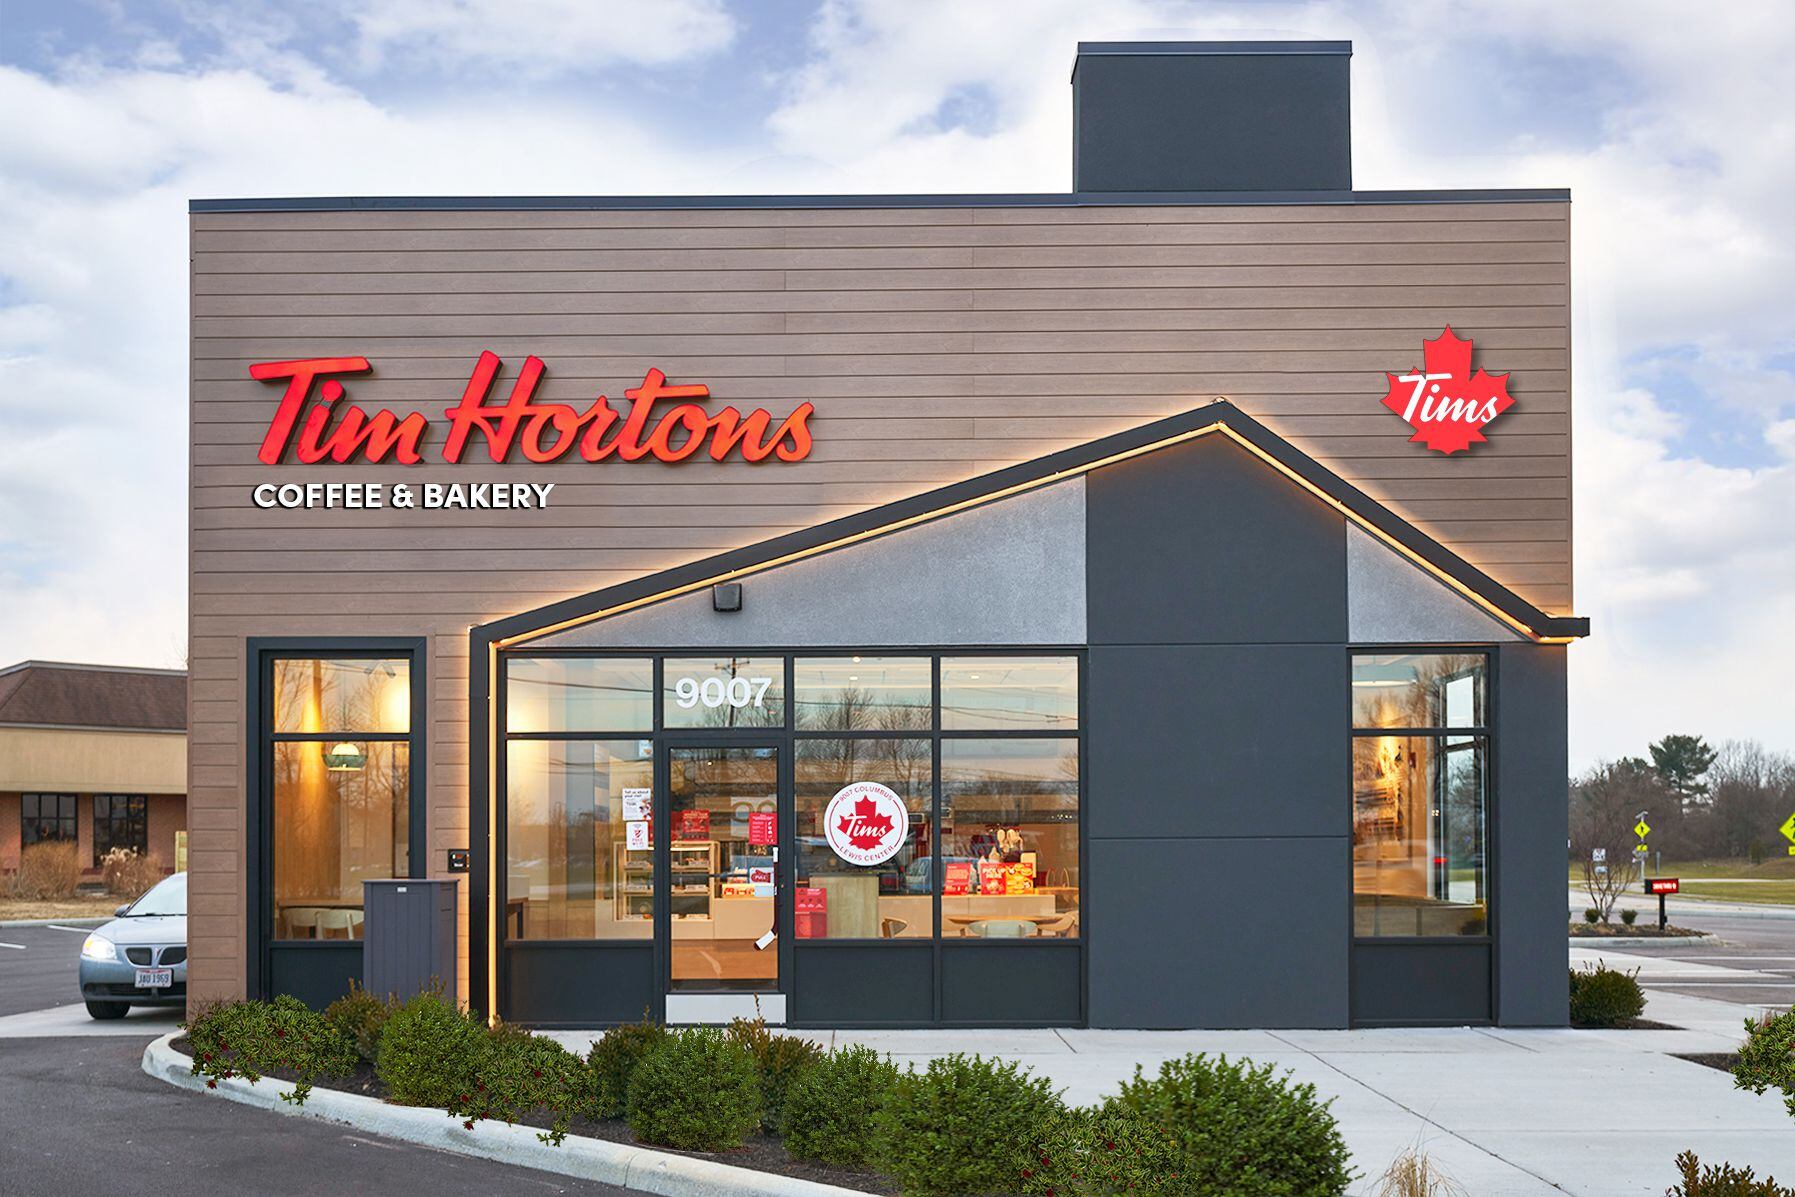 Tim Hortons opening in Georgia: 15 locations in Atlanta, Columbus